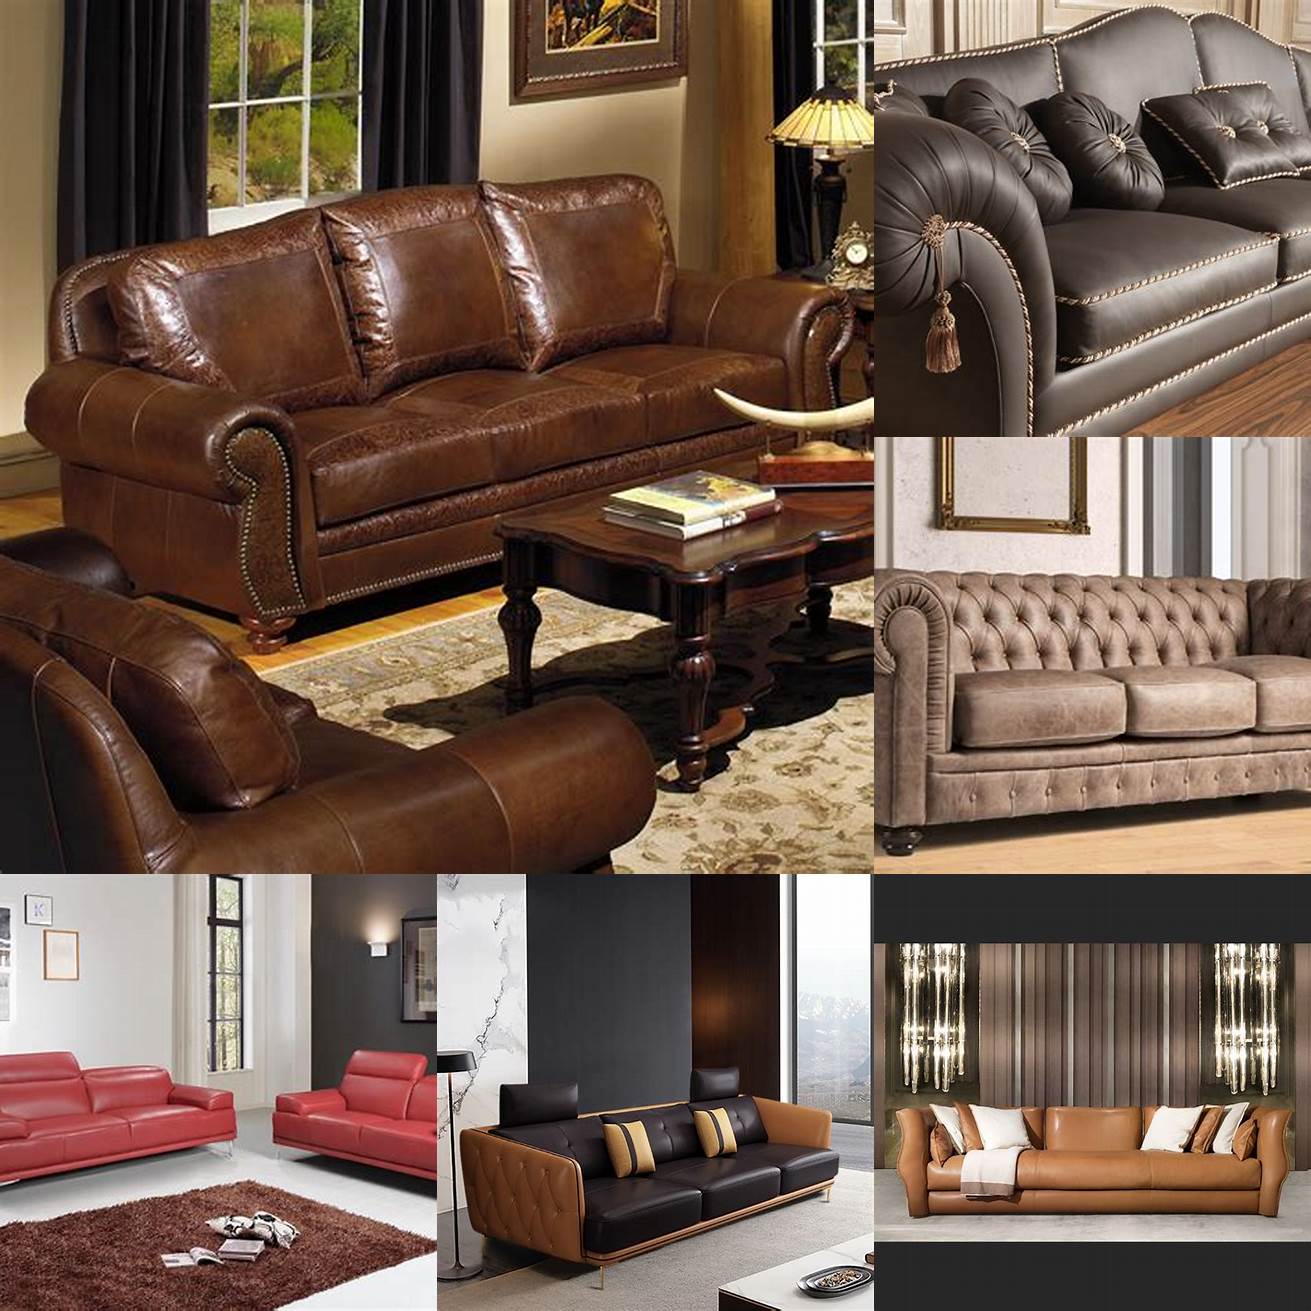 1 Luxurious leather sofa